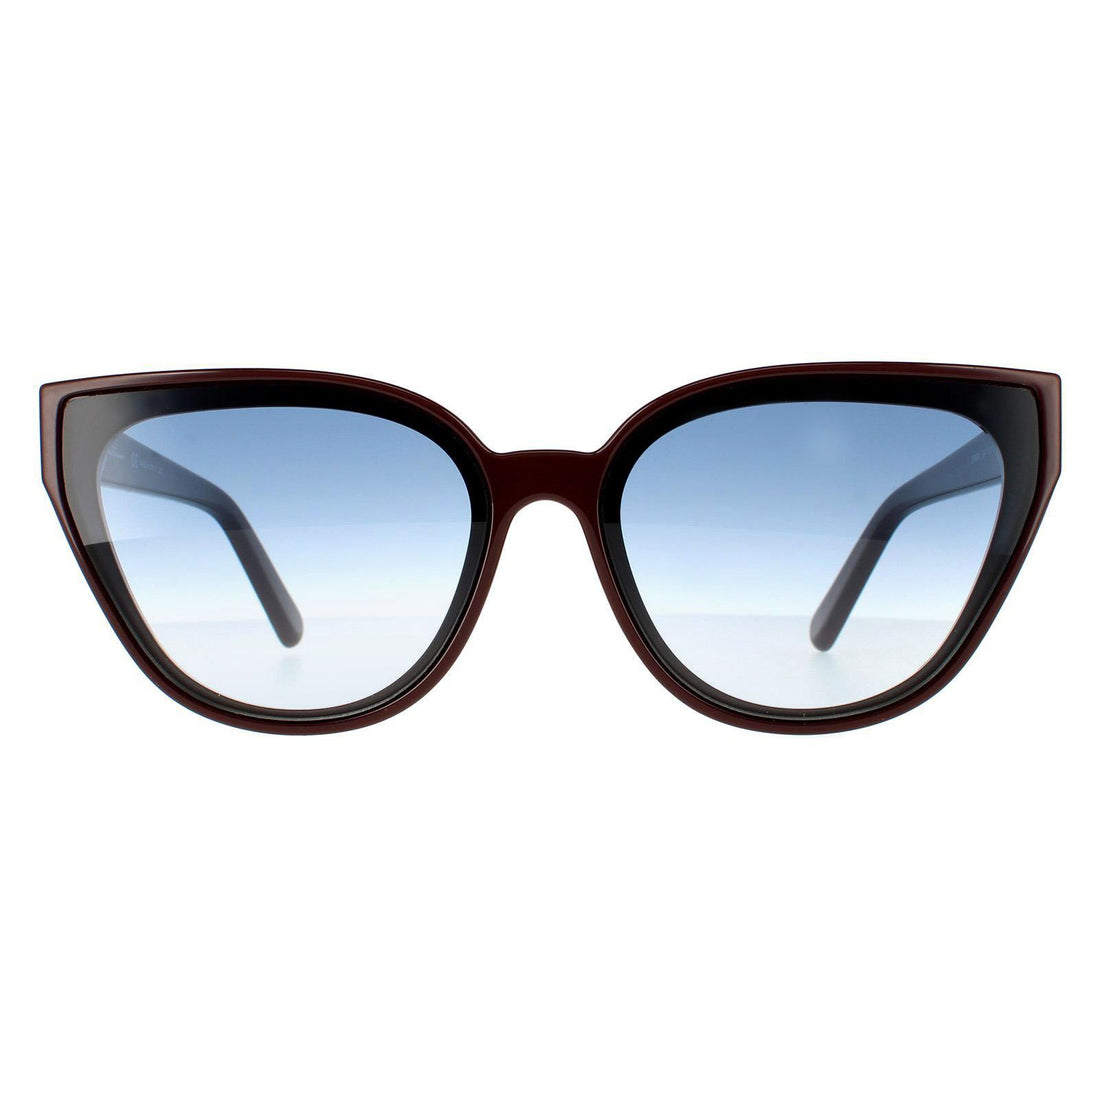 Salvatore Ferragamo SF997S Sunglasses Burgundy / Blue Gradient